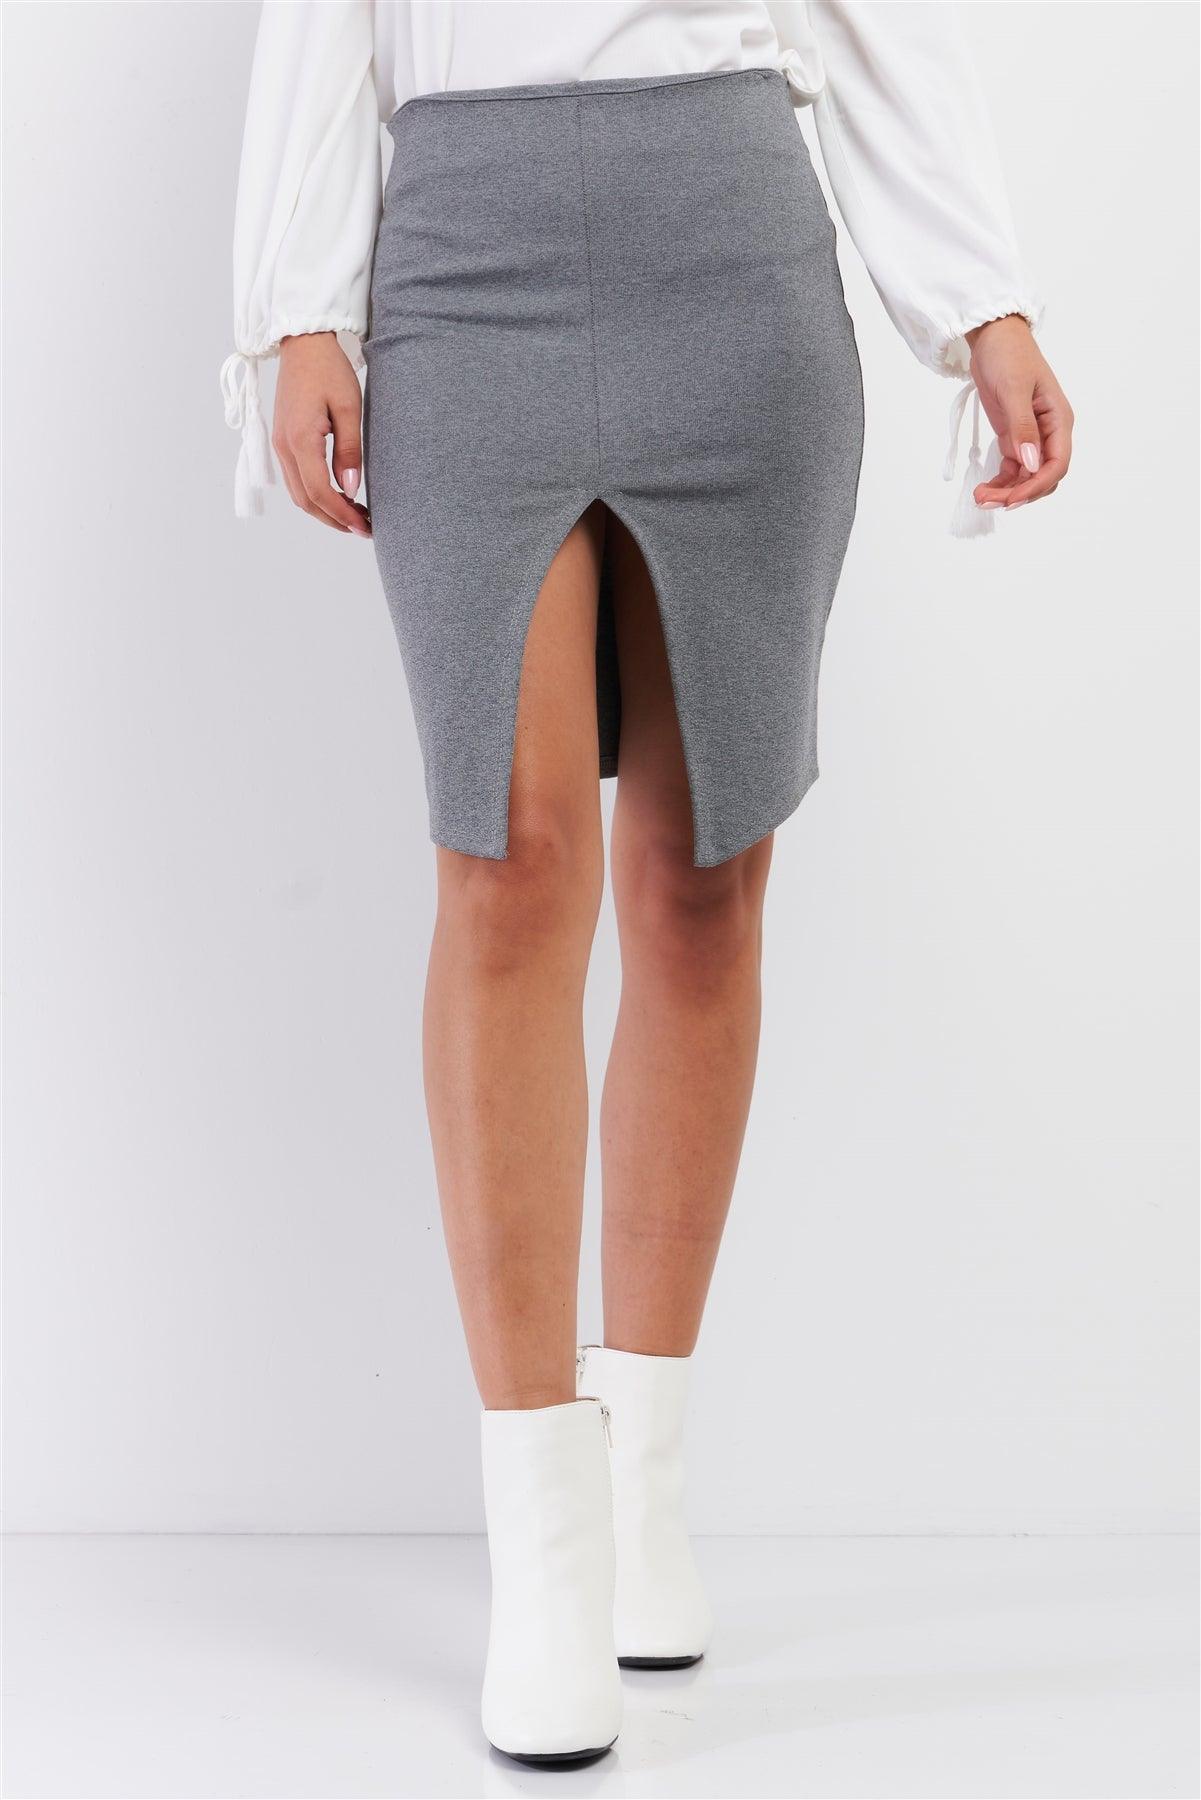 Heather Grey Front Slit Bodycon Mini Skirt /3-2-1